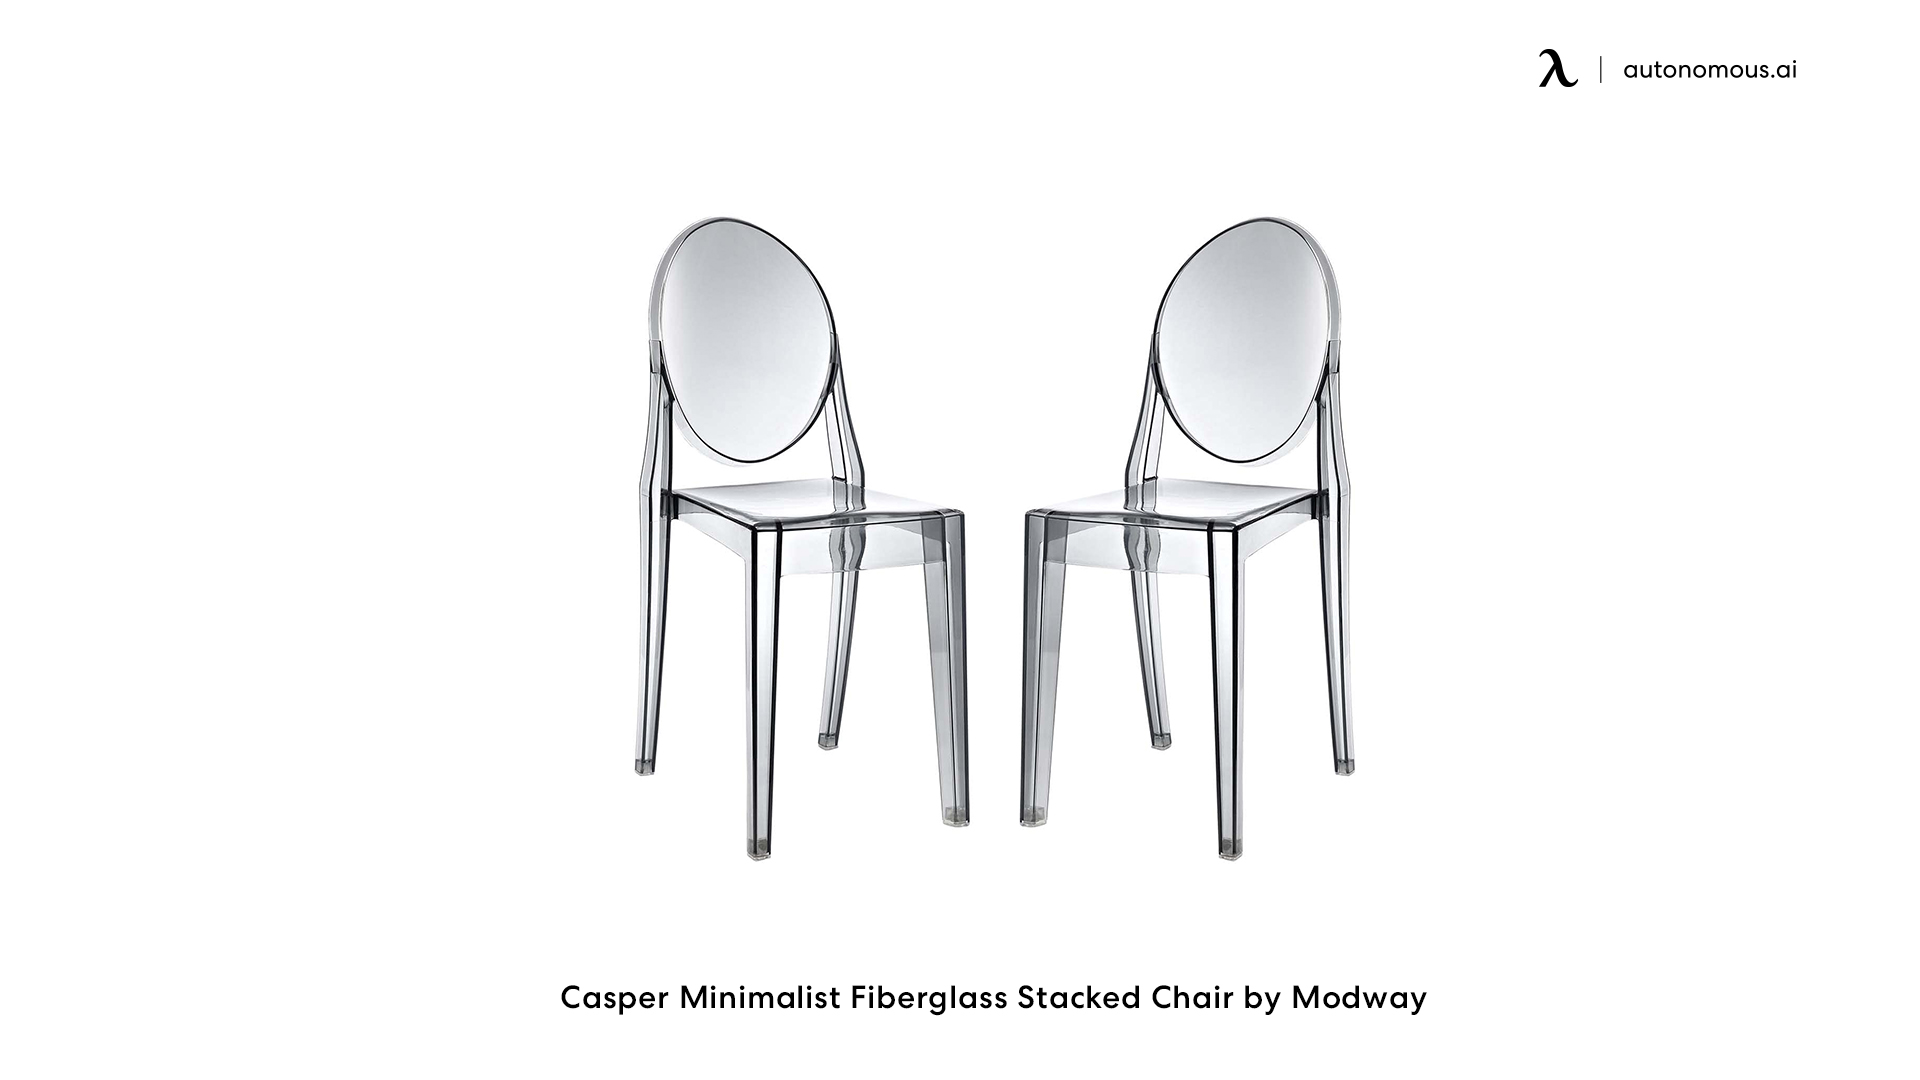 Modway Store's Casper-style Chair